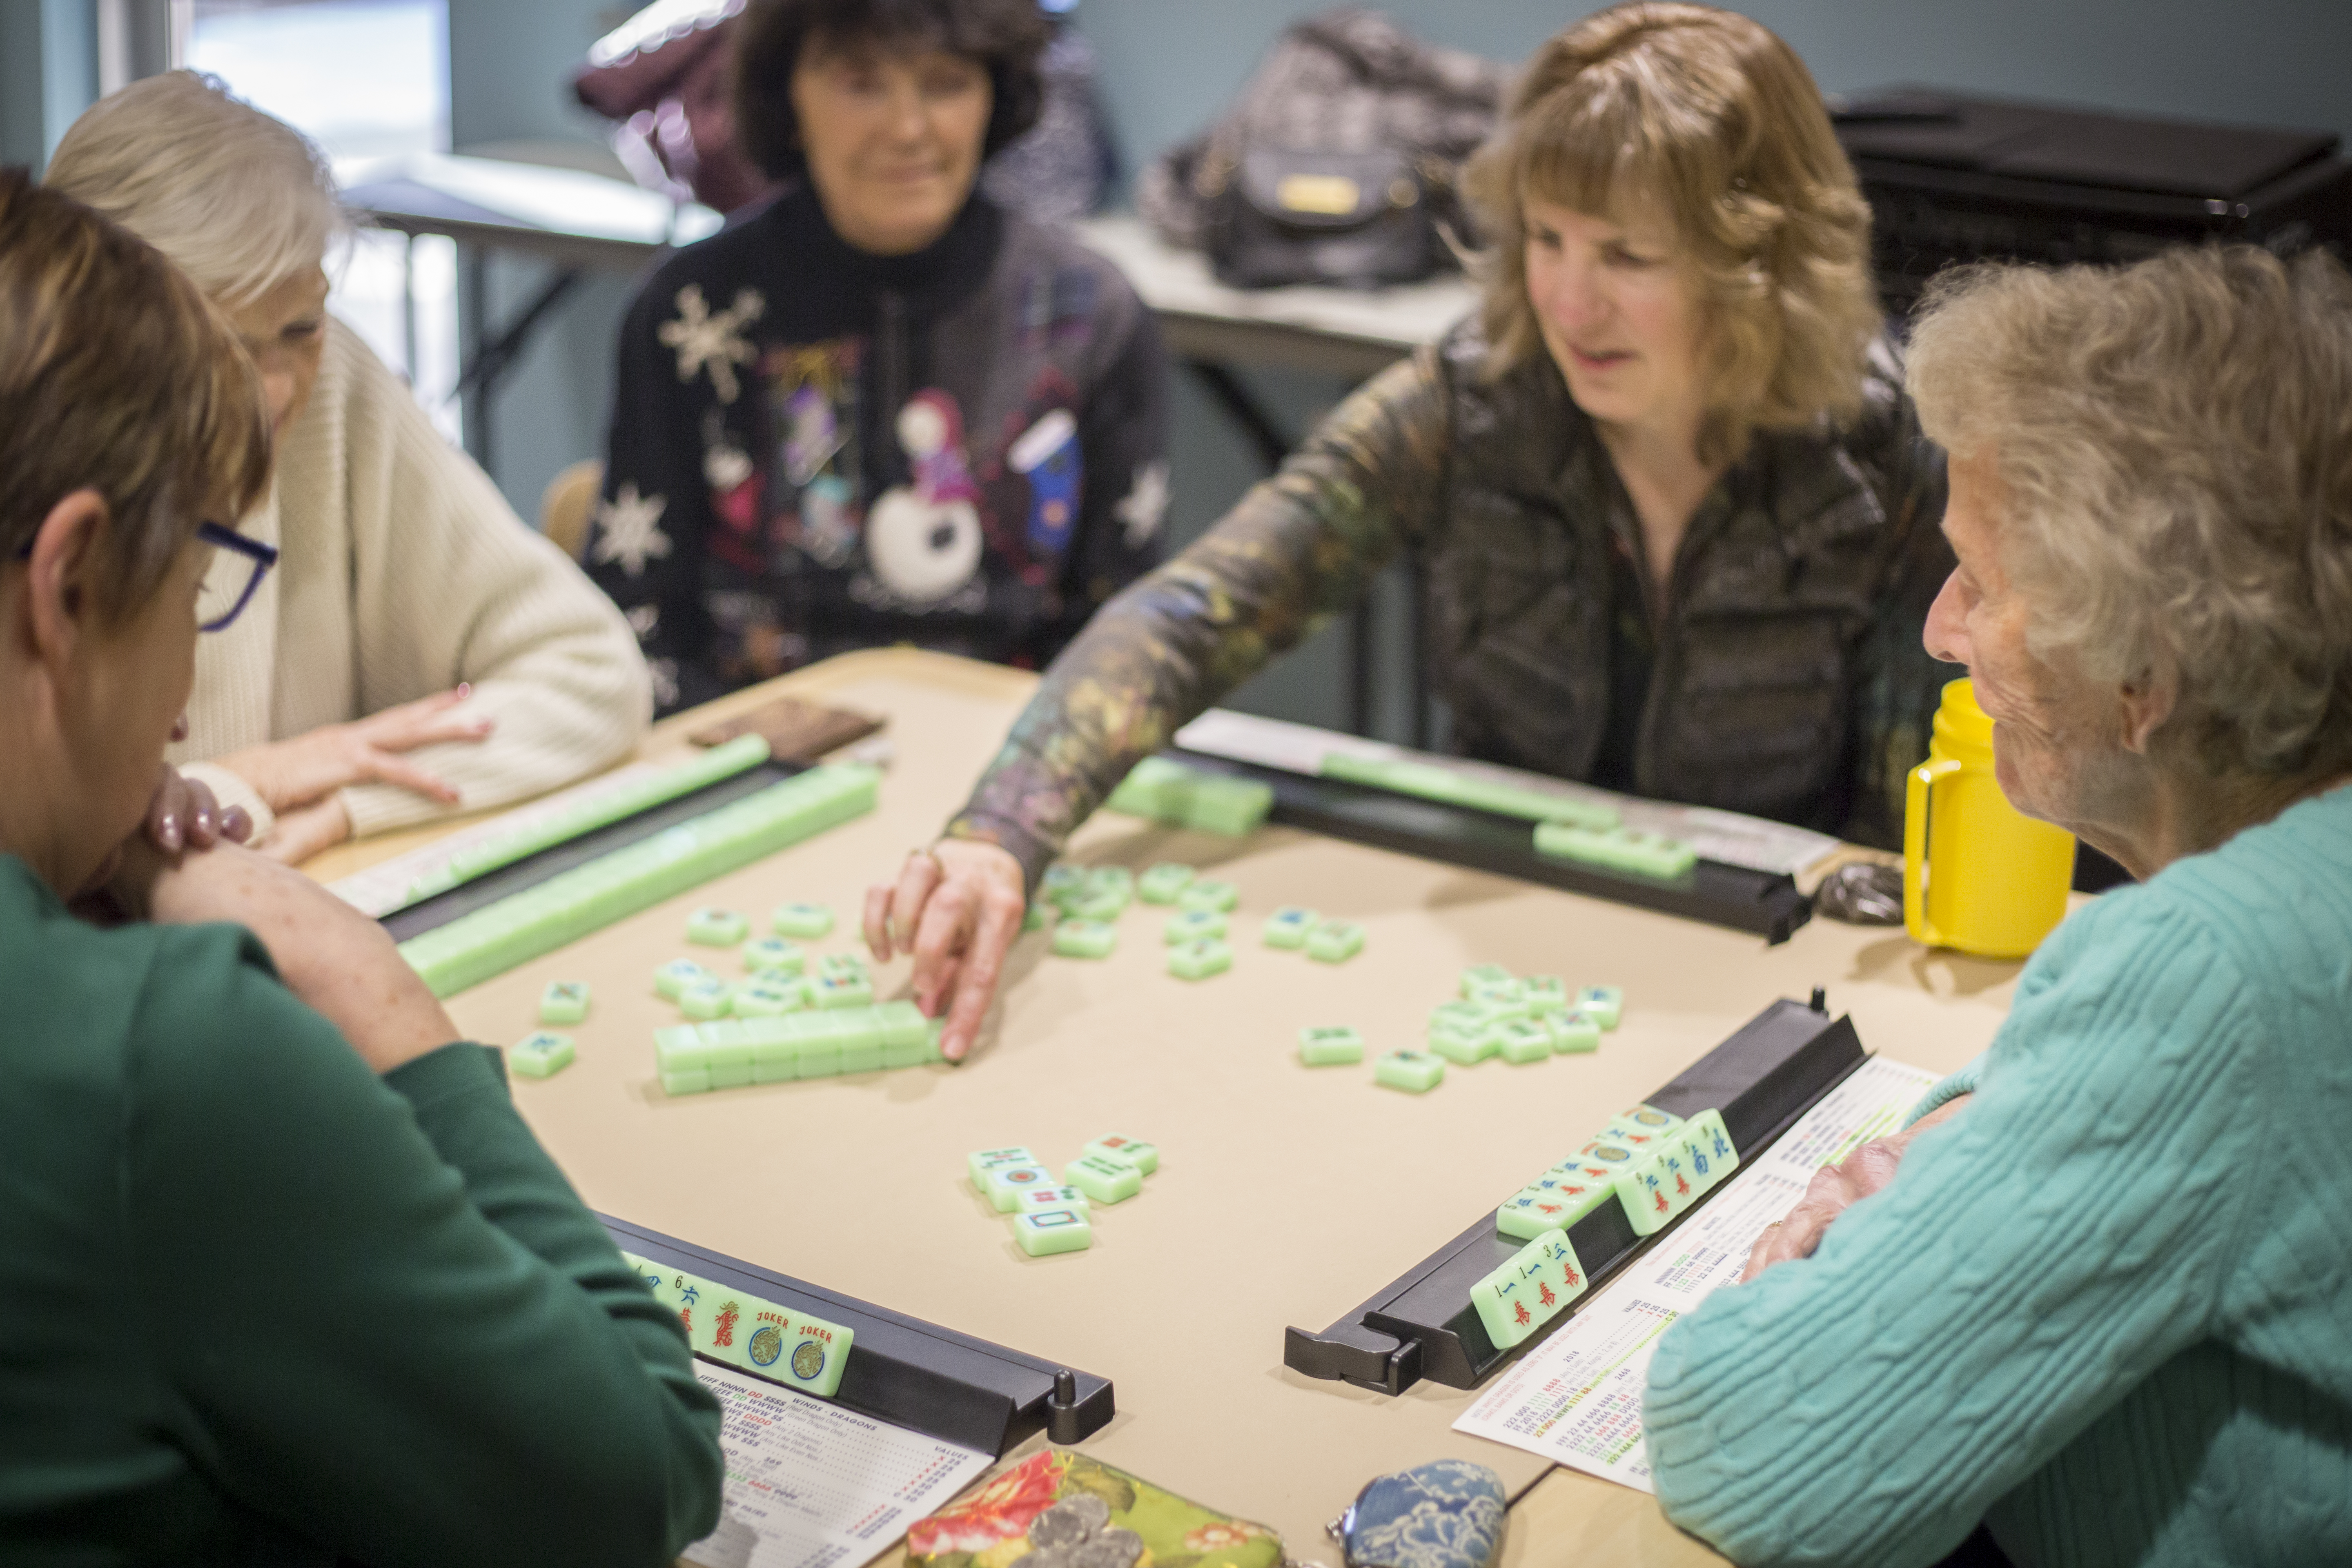 A group of older adults play games at Social activity at Bend Senior Center.